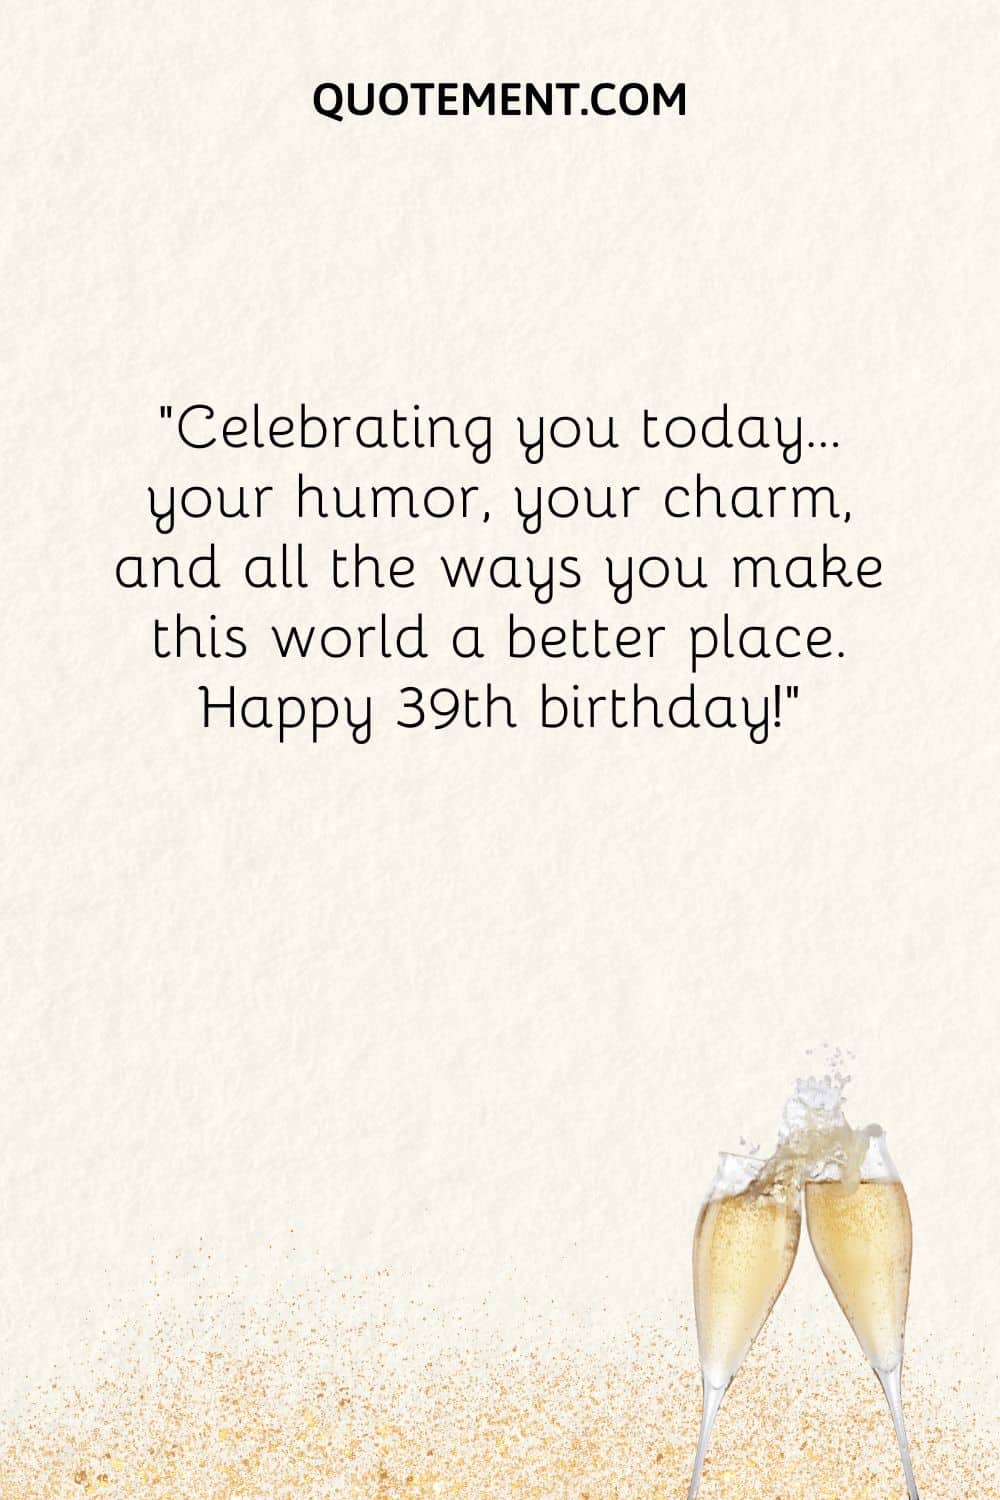 Celebrating you today.